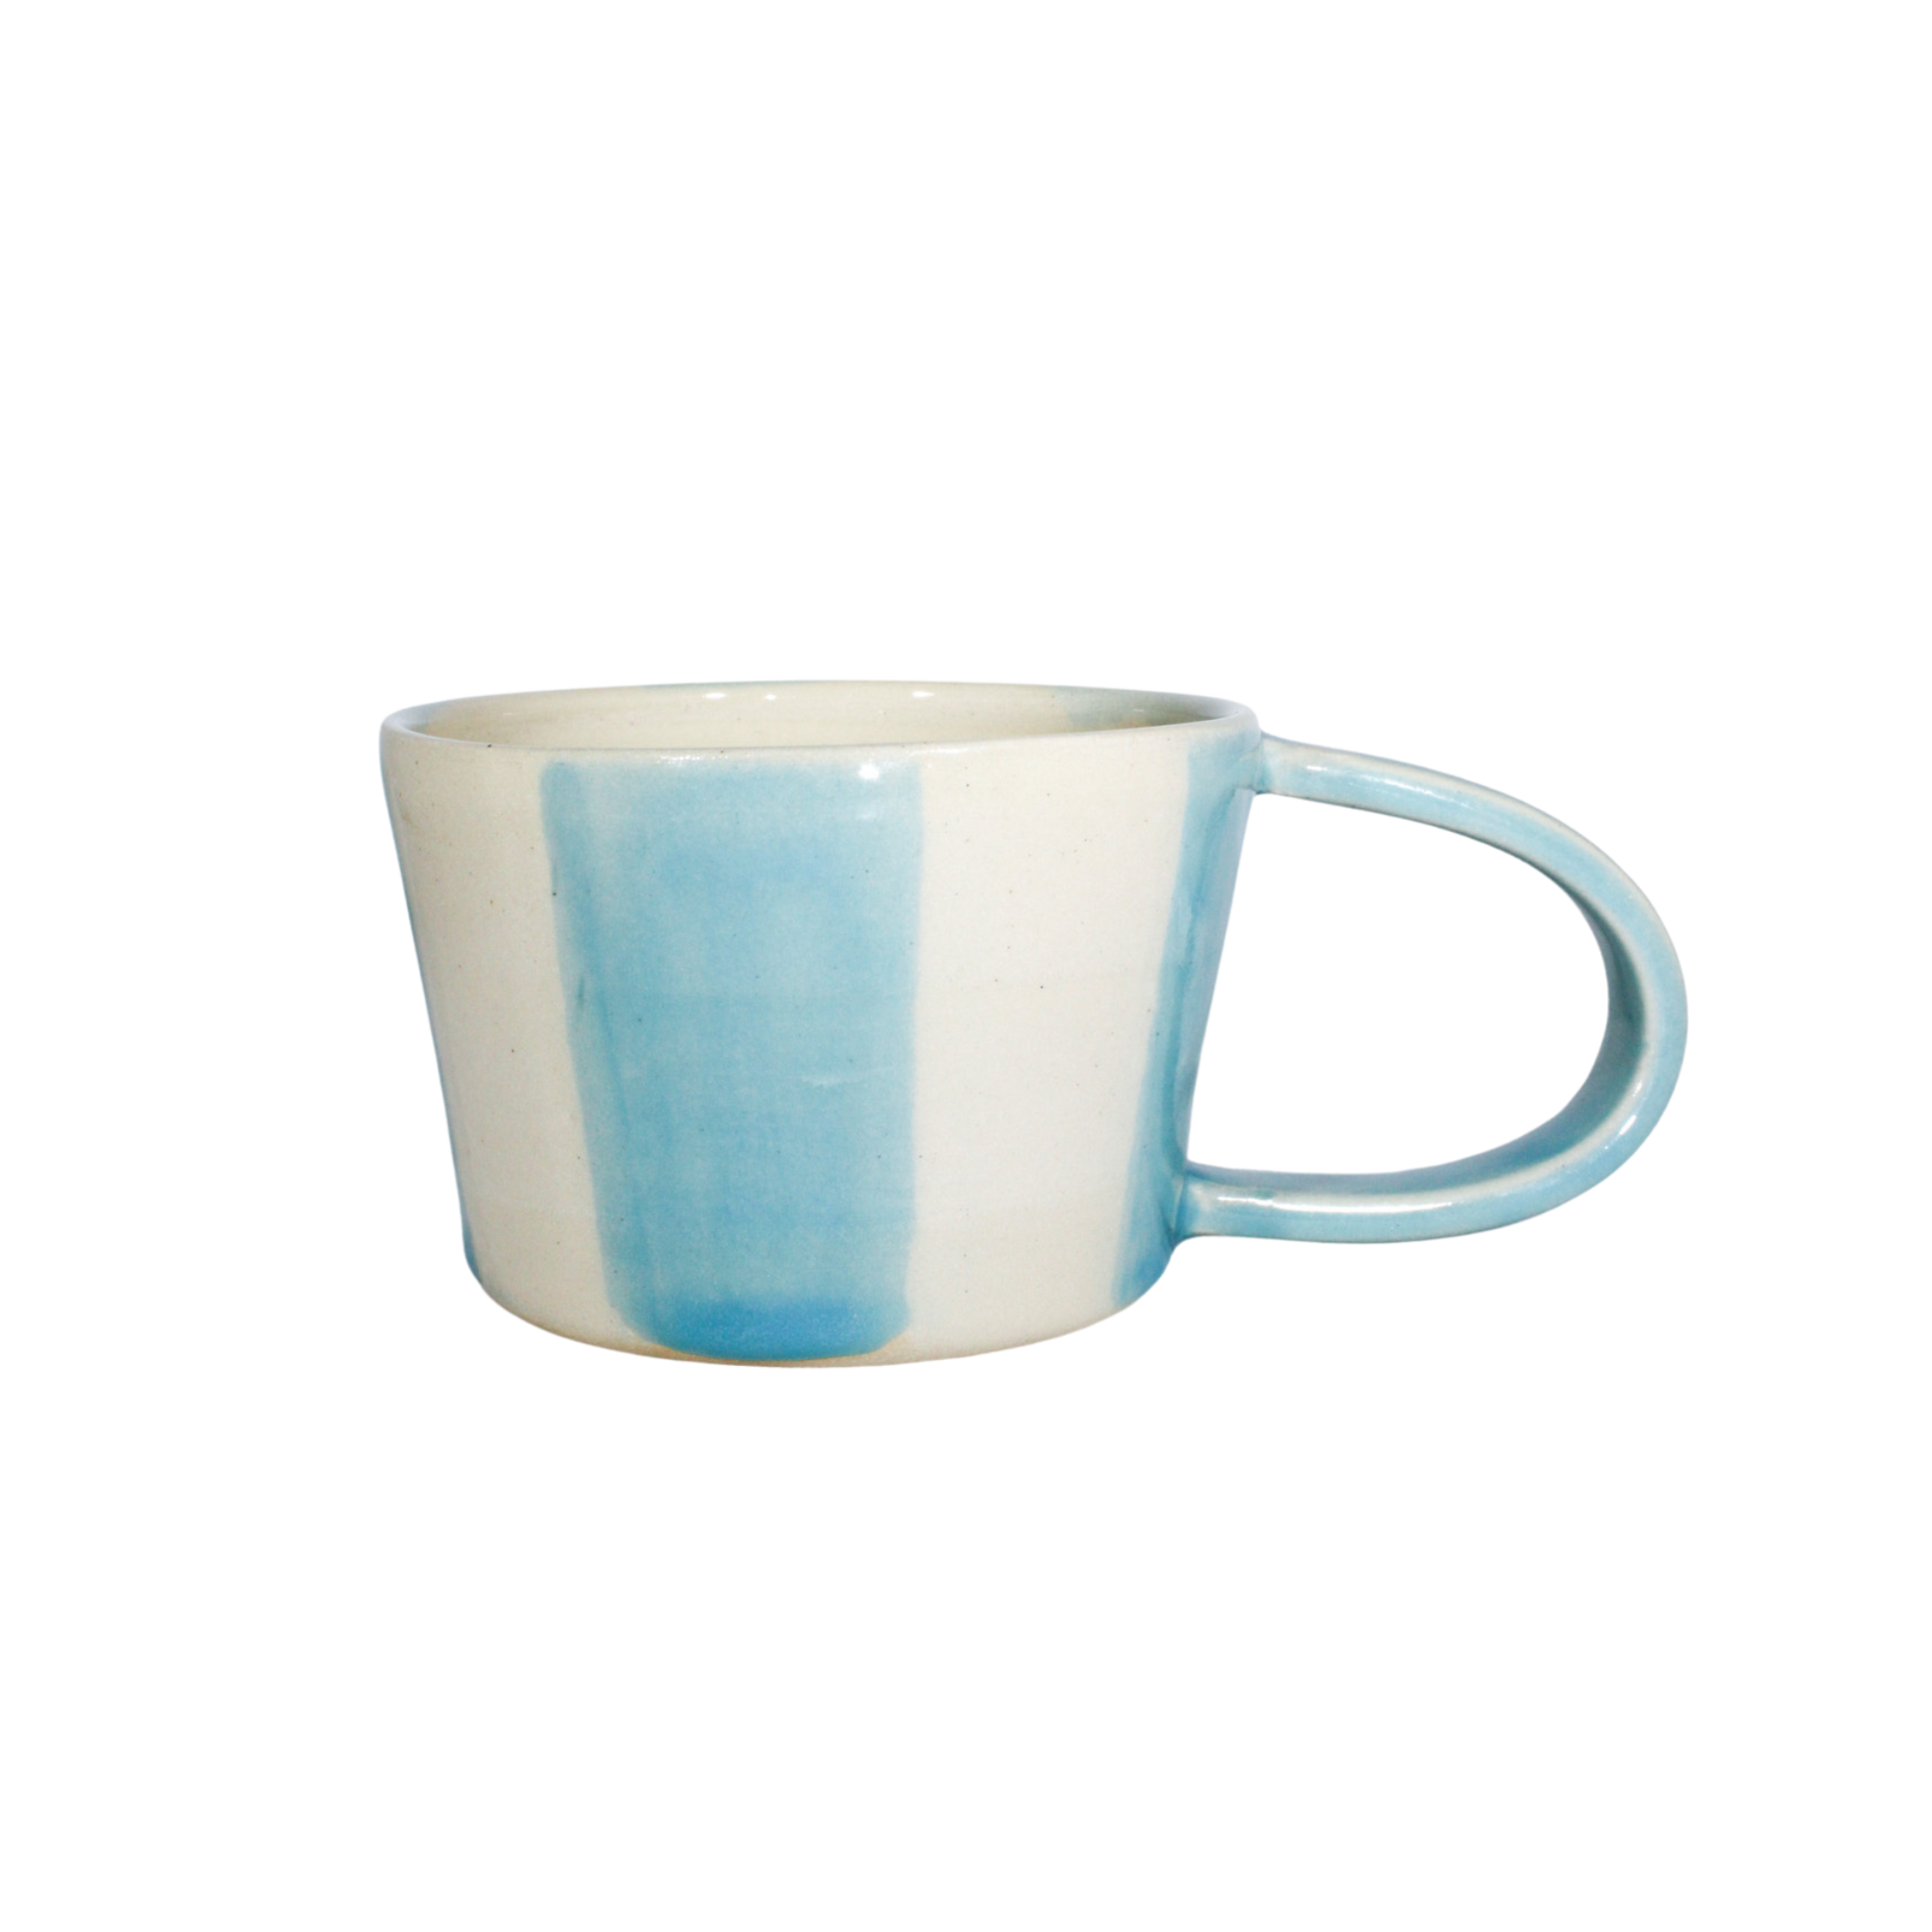 Hvid og blå stribet kop